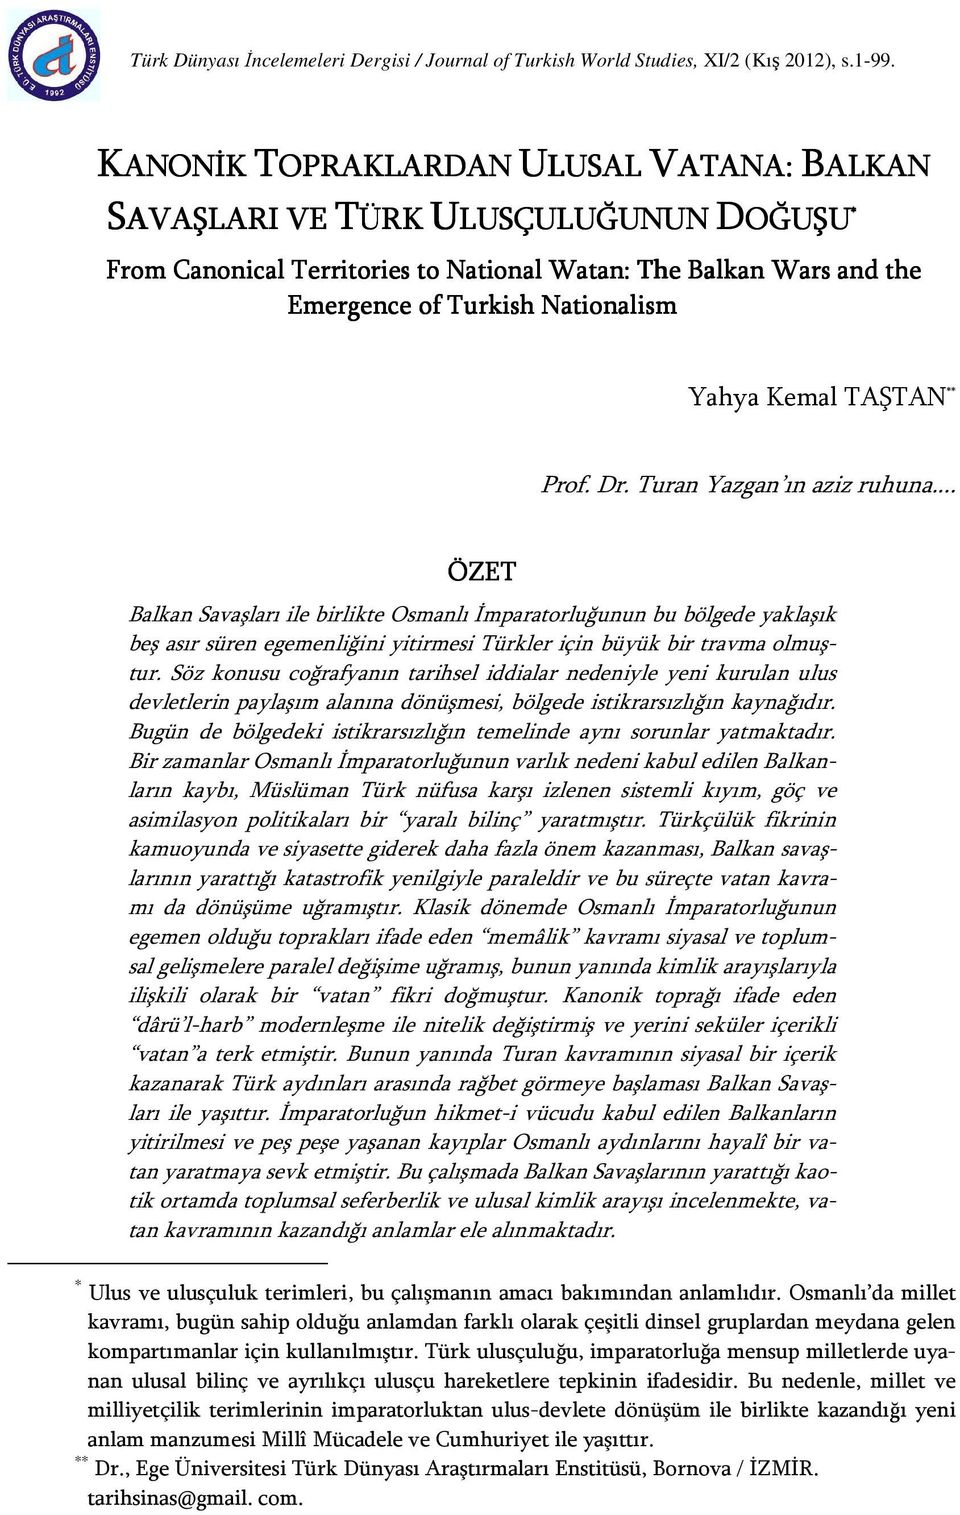 TATAN ** Prof. Dr. Turan Yazgan ın aziz ruhuna.